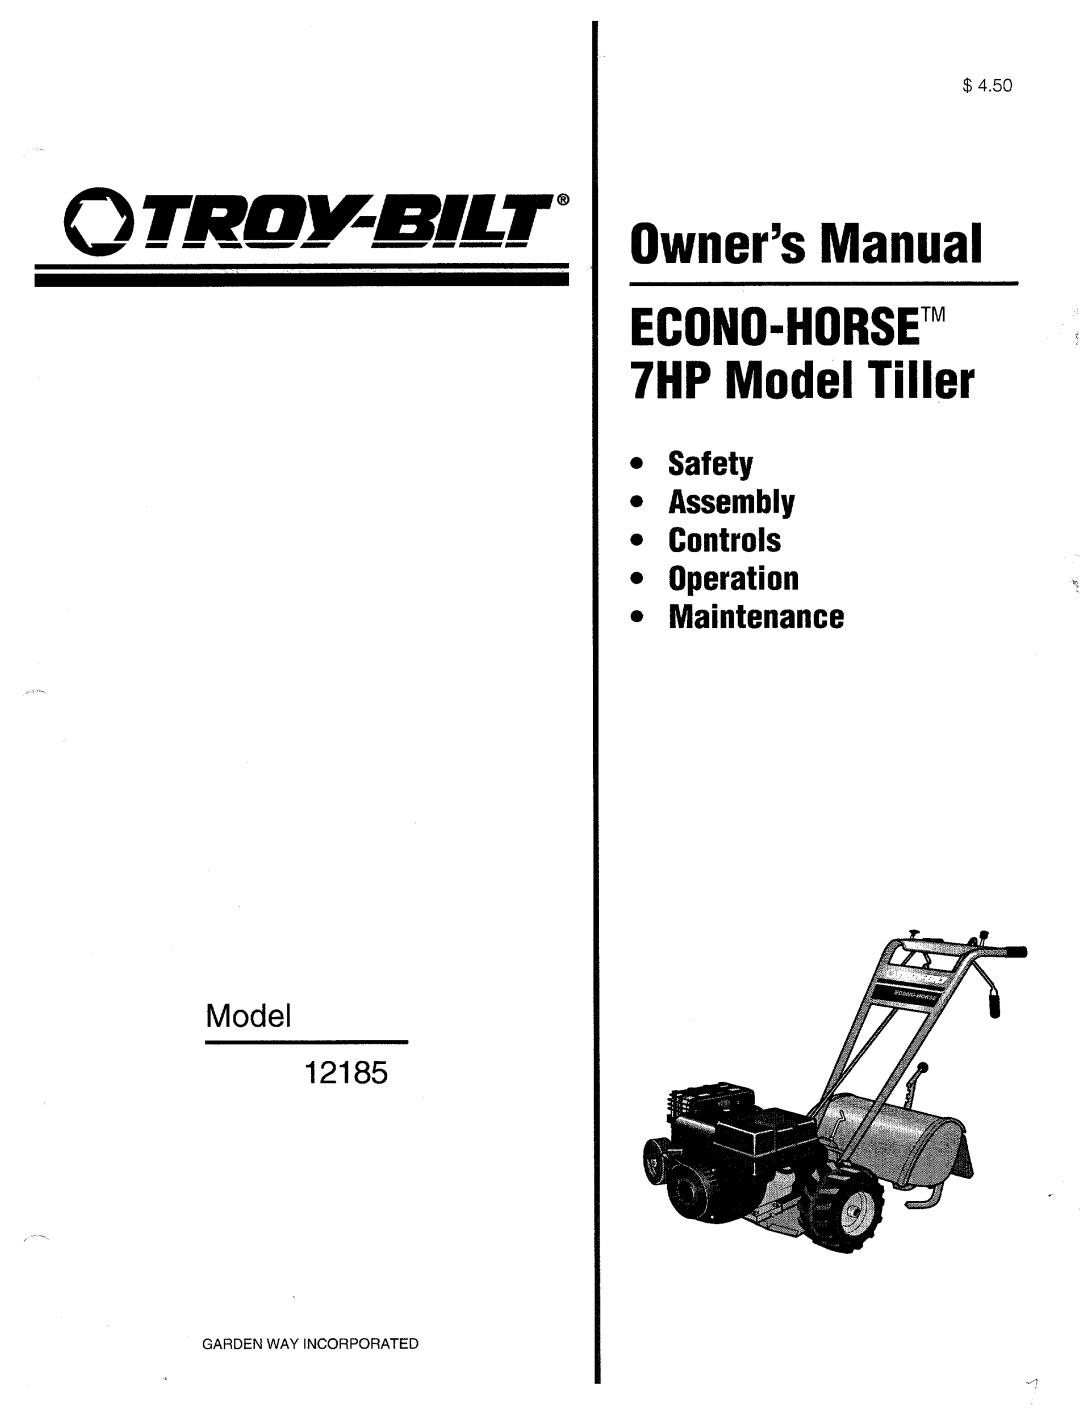 Troy-Bilt 12185 manual 